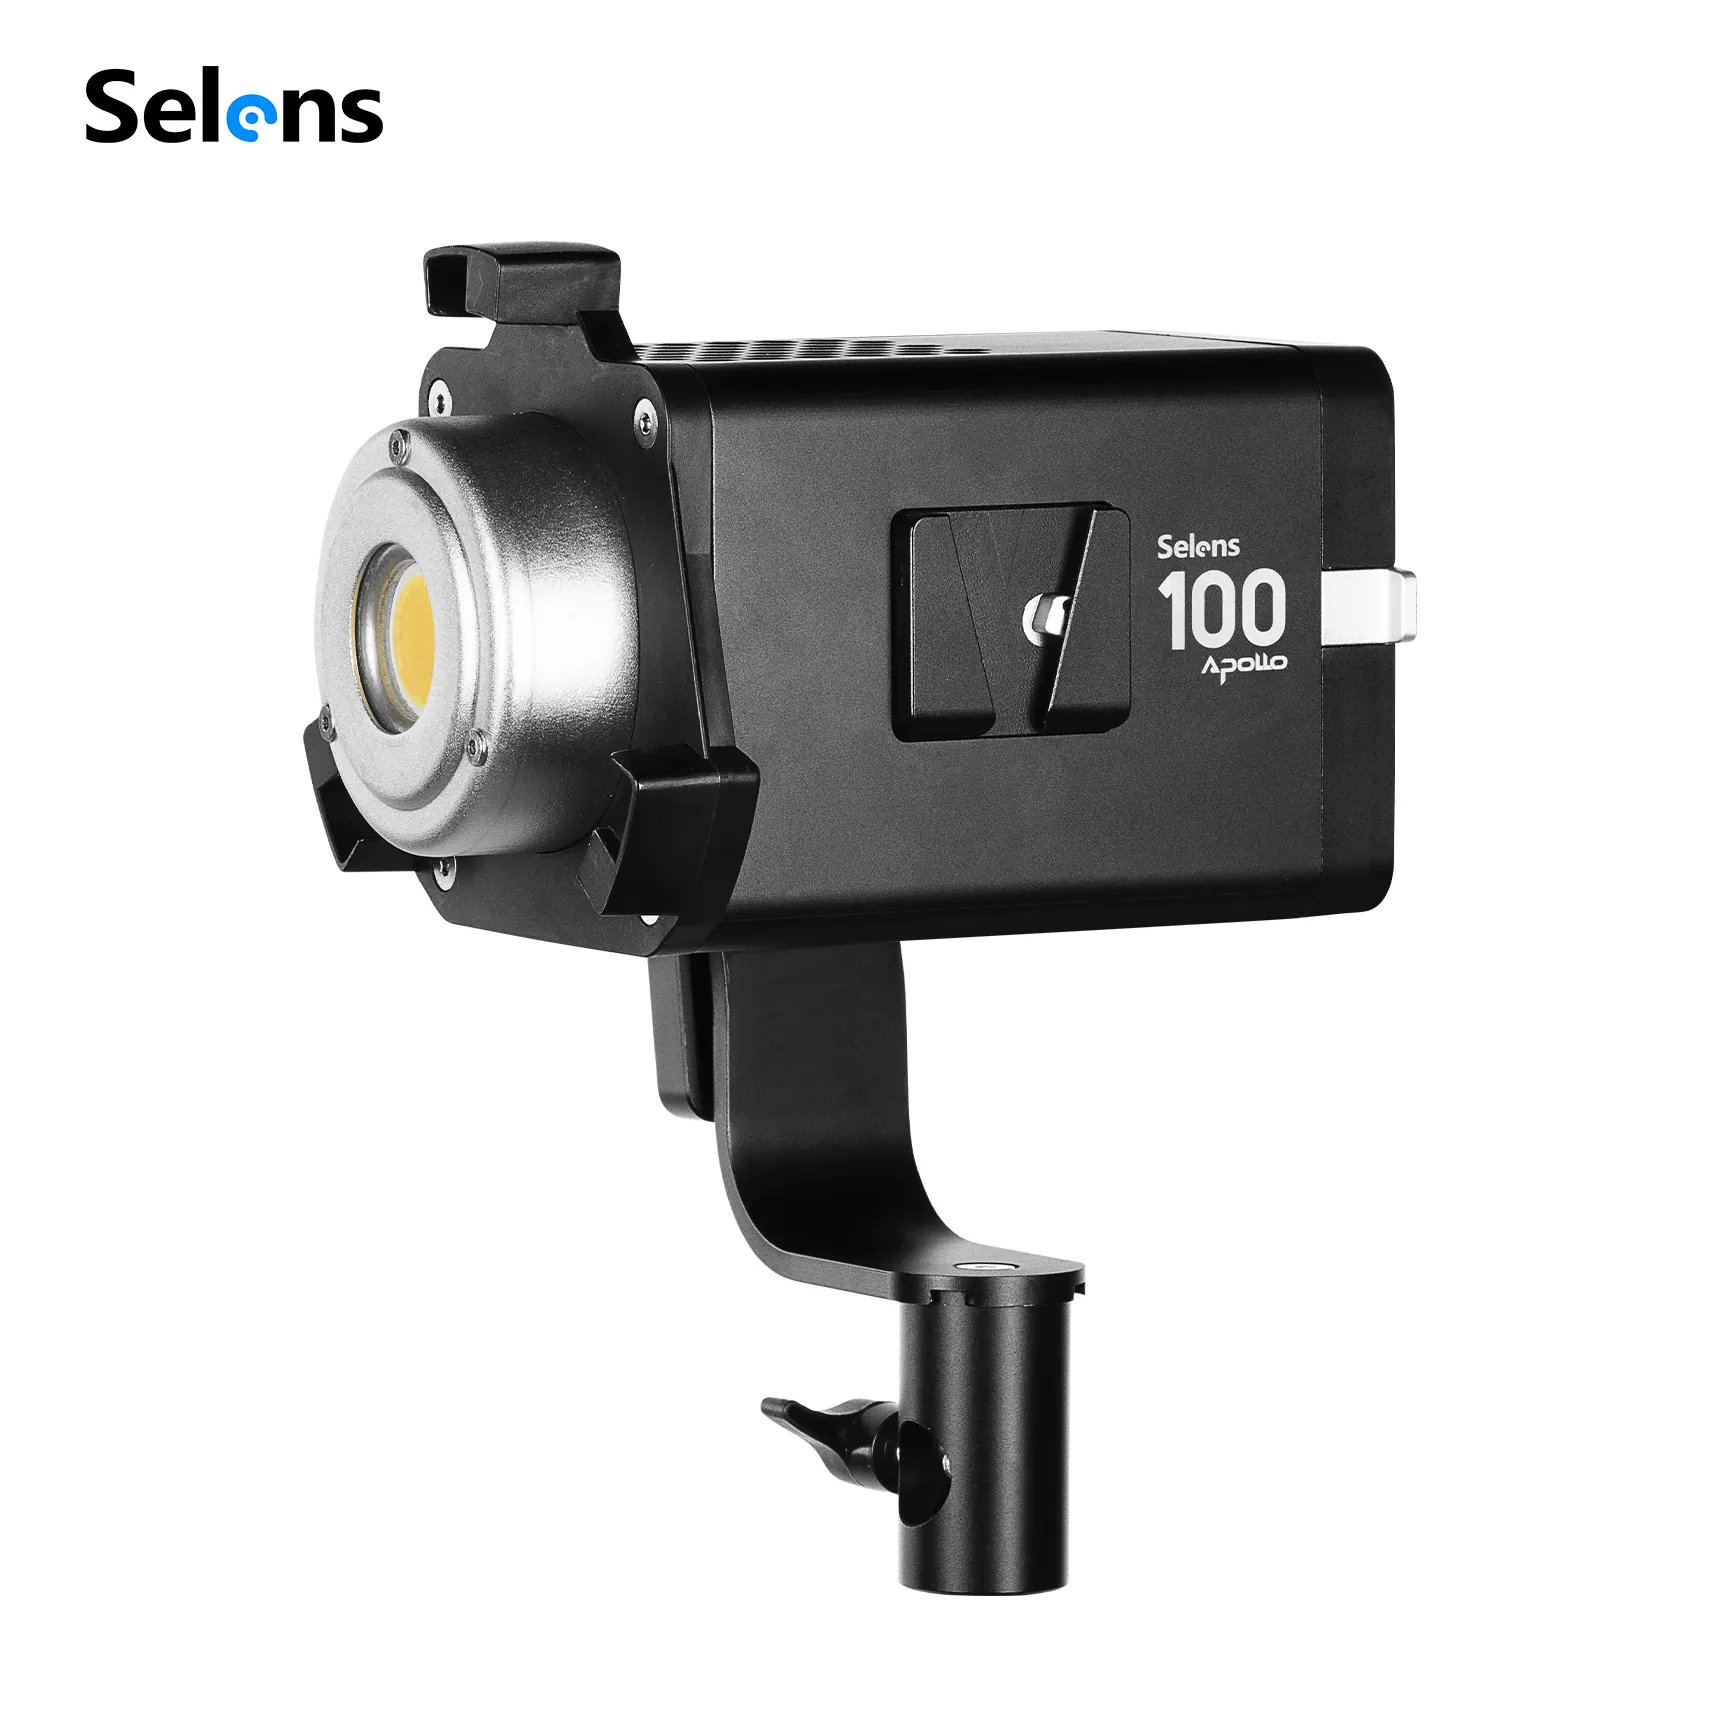 Selens Apollo Professional Photography Lighting 100W 6500K COB Bi-color Point-Source LED Daylight Video Studio Light